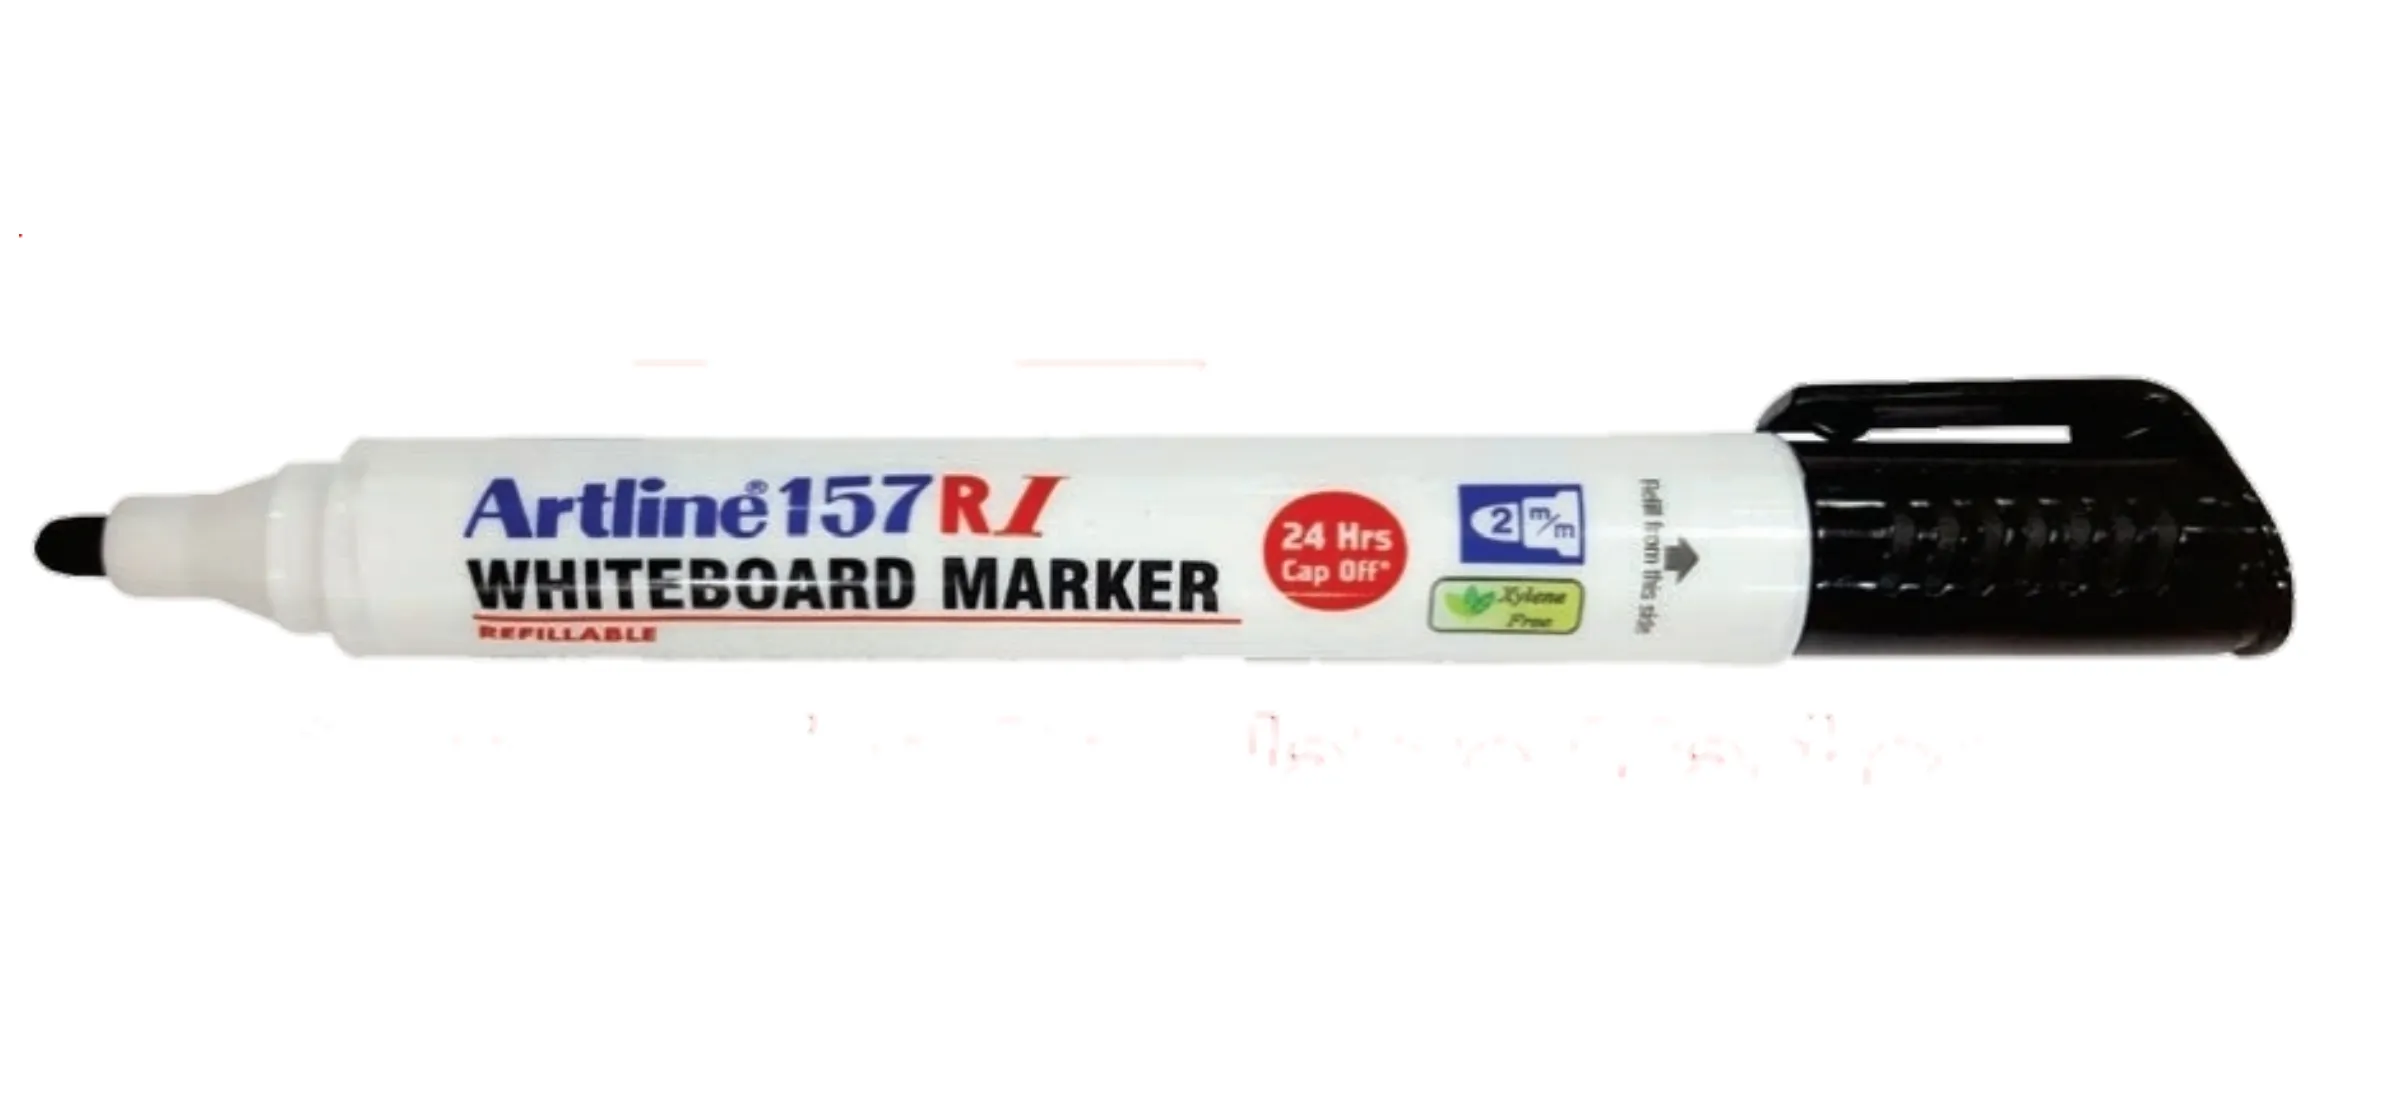 Artline White Board Marker 157 RI Refillable Black Colour Pack of 5 Marker